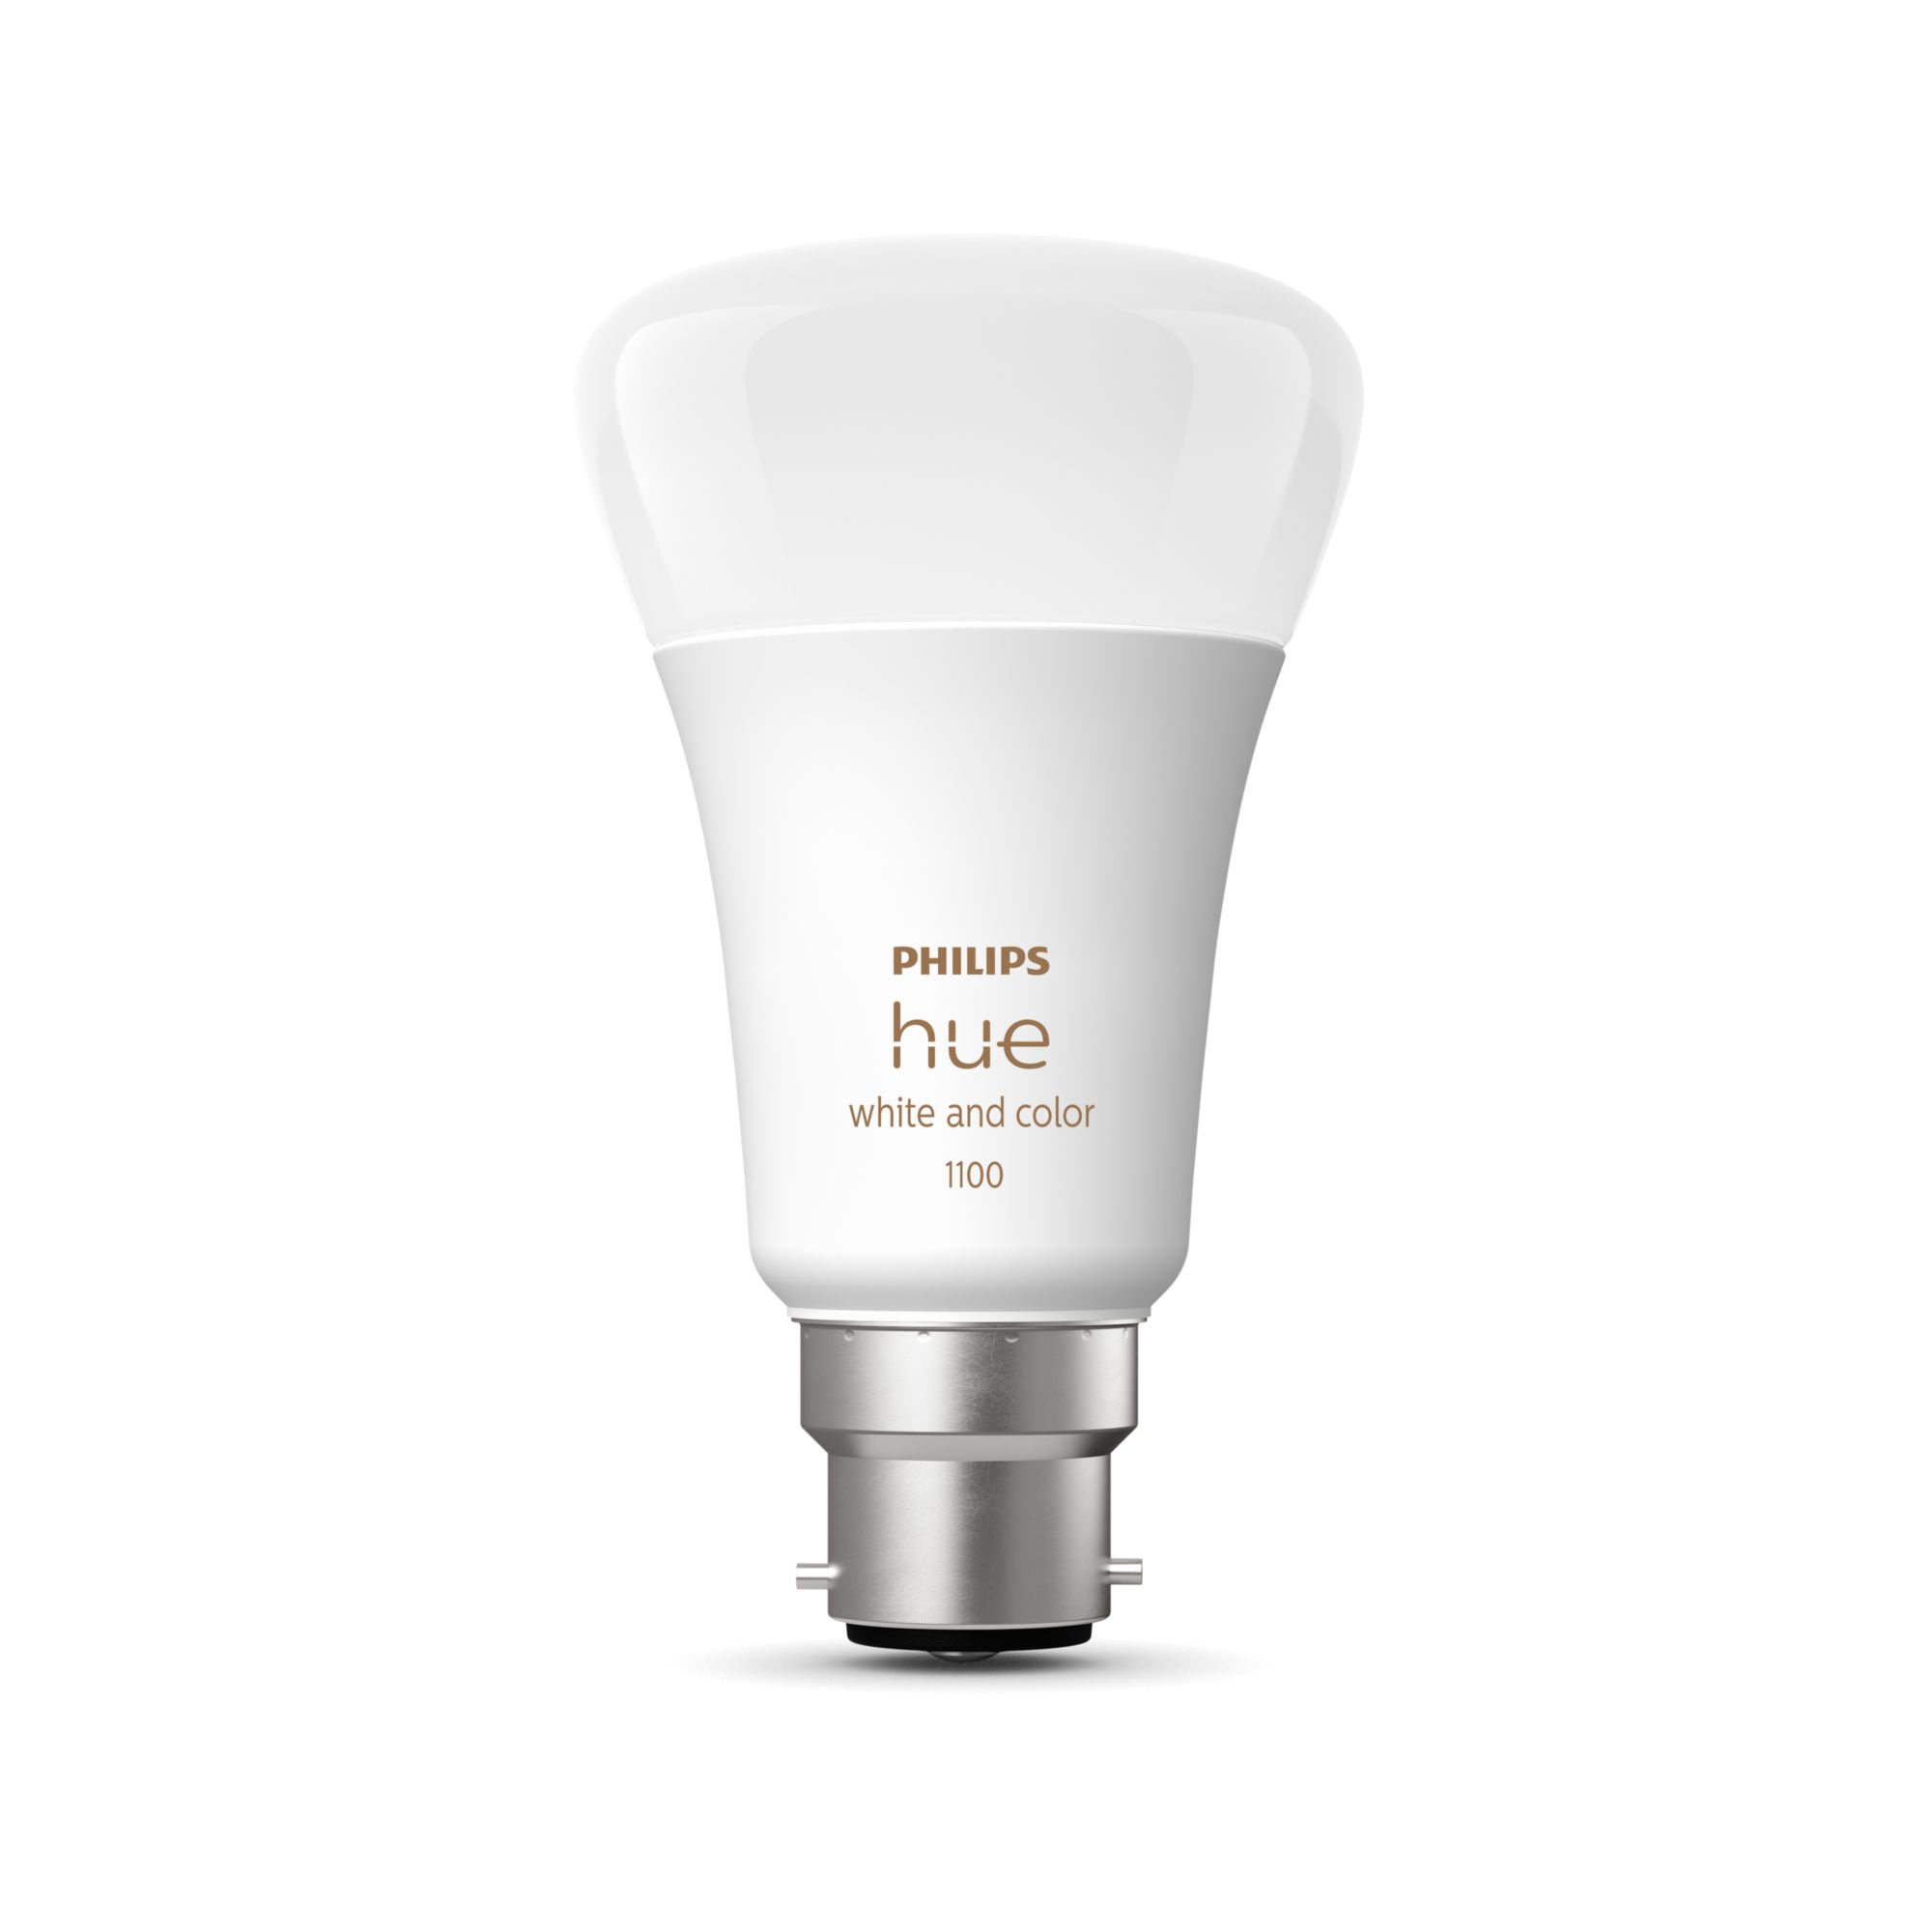 Philips by Signify Hue White and Color ambiance 8719514291218 soluzione di illuminazione intelligente Lampadina 9 W Bianco Bluetooth/Zigbee [8719514291218]